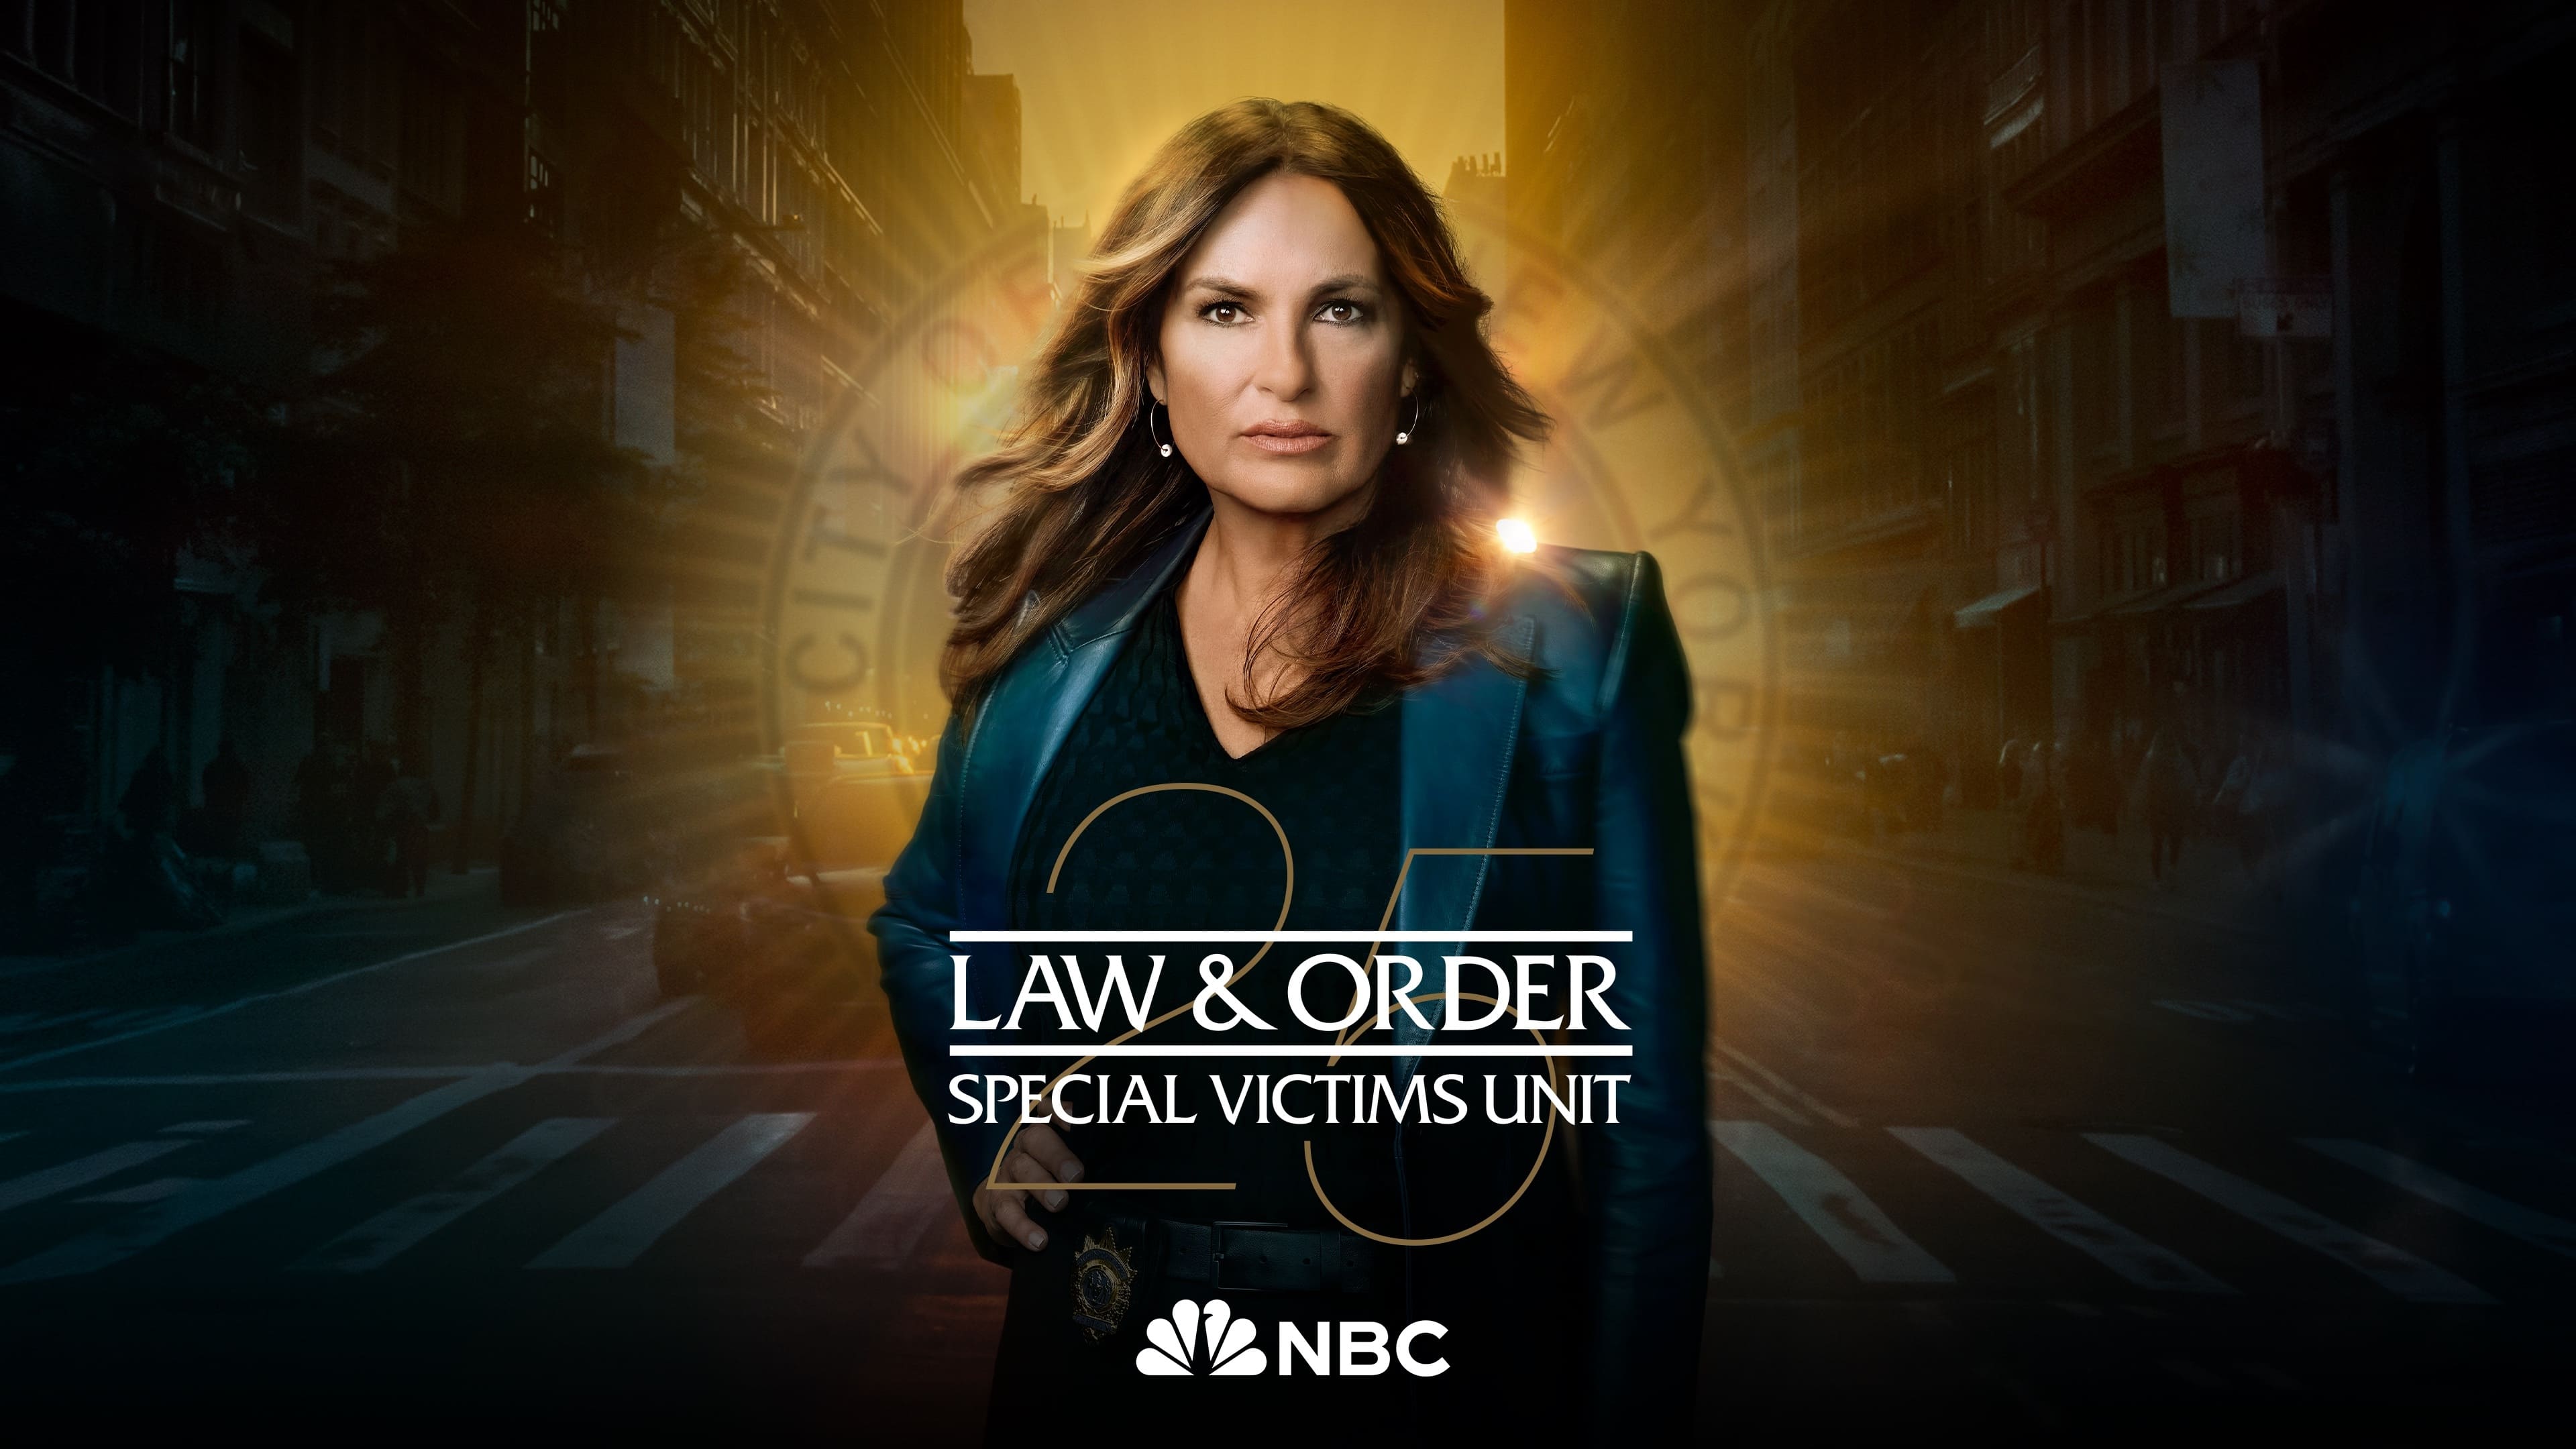 Law & Order: Special Victims Unit - Season 2